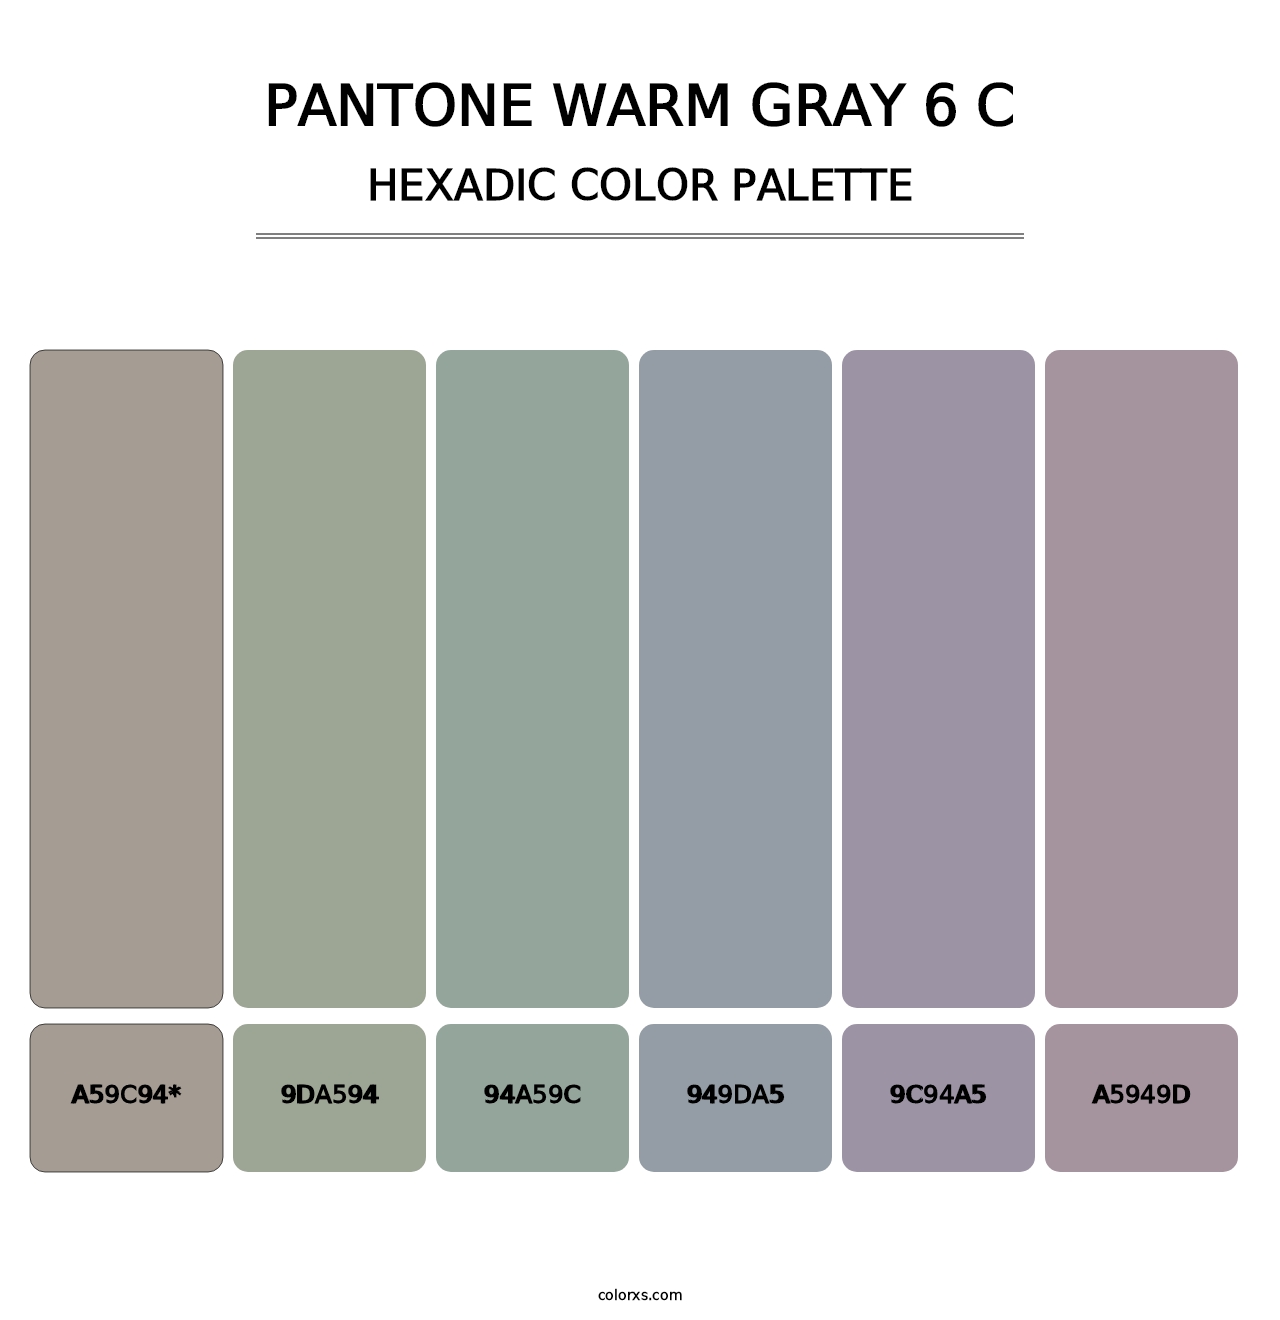 PANTONE Warm Gray 6 C - Hexadic Color Palette